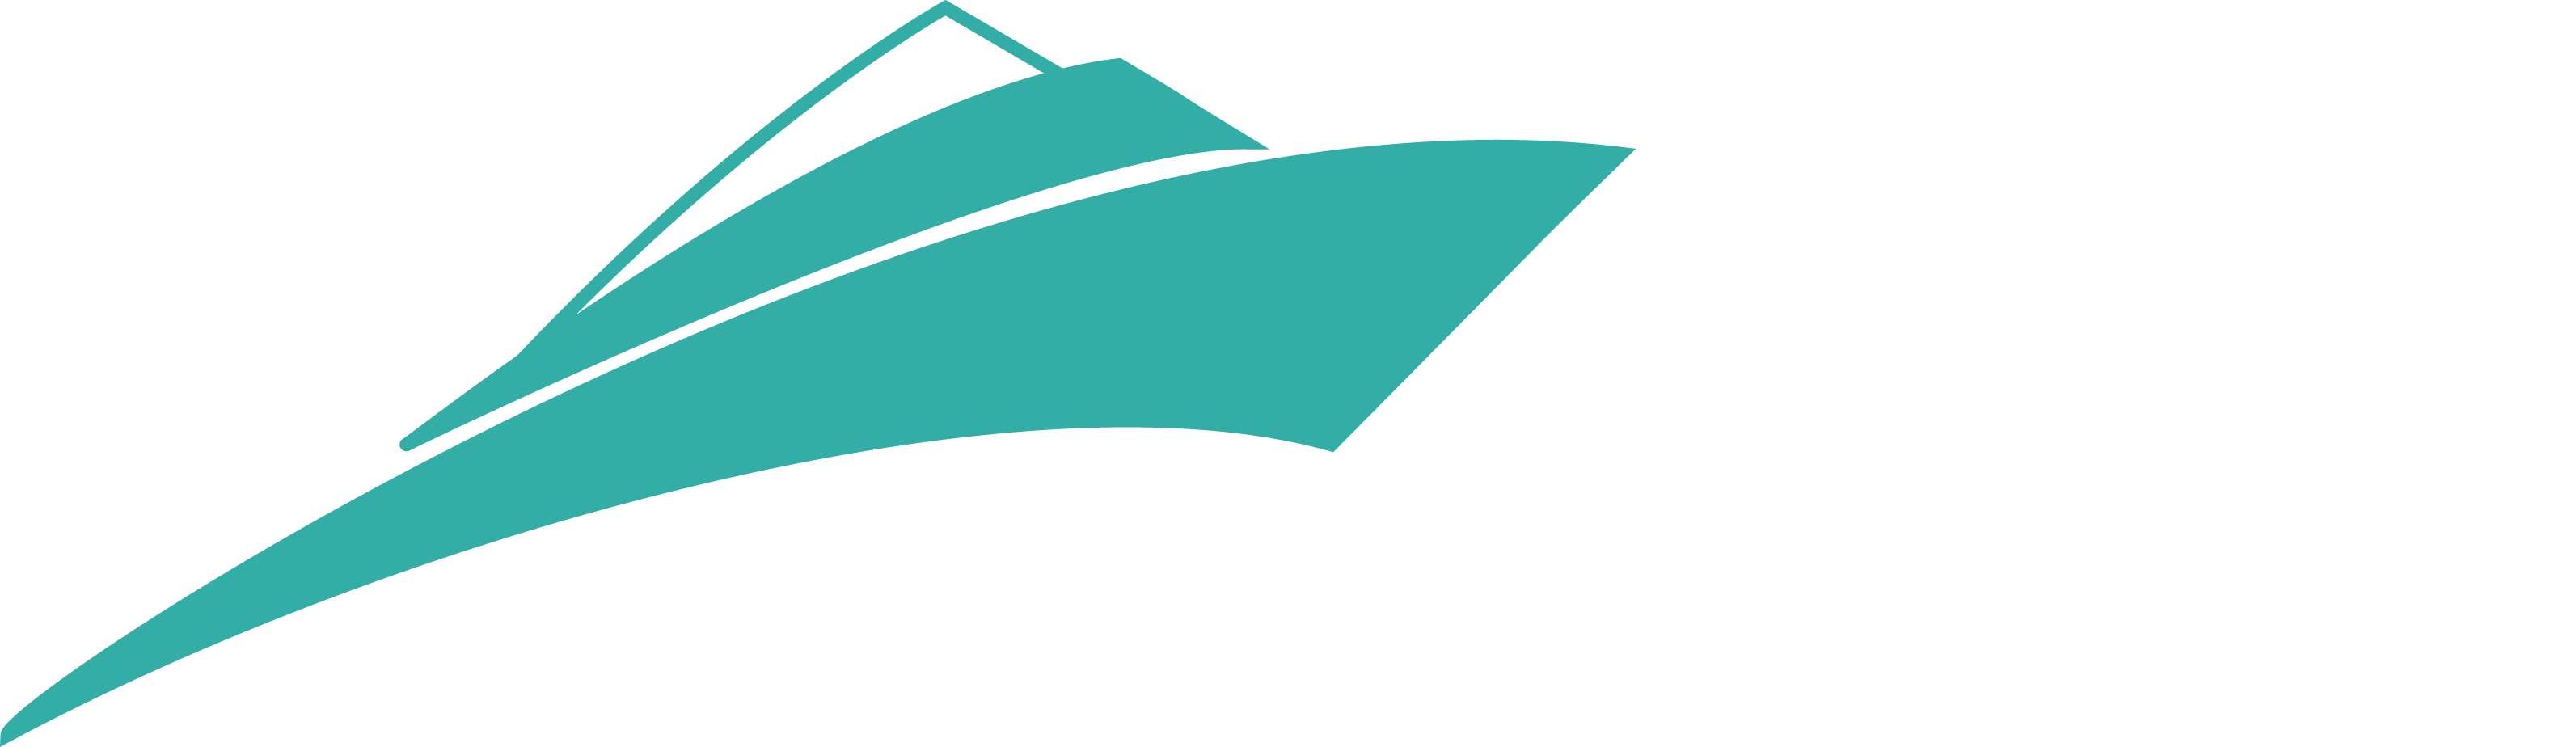 x yachts x56 price